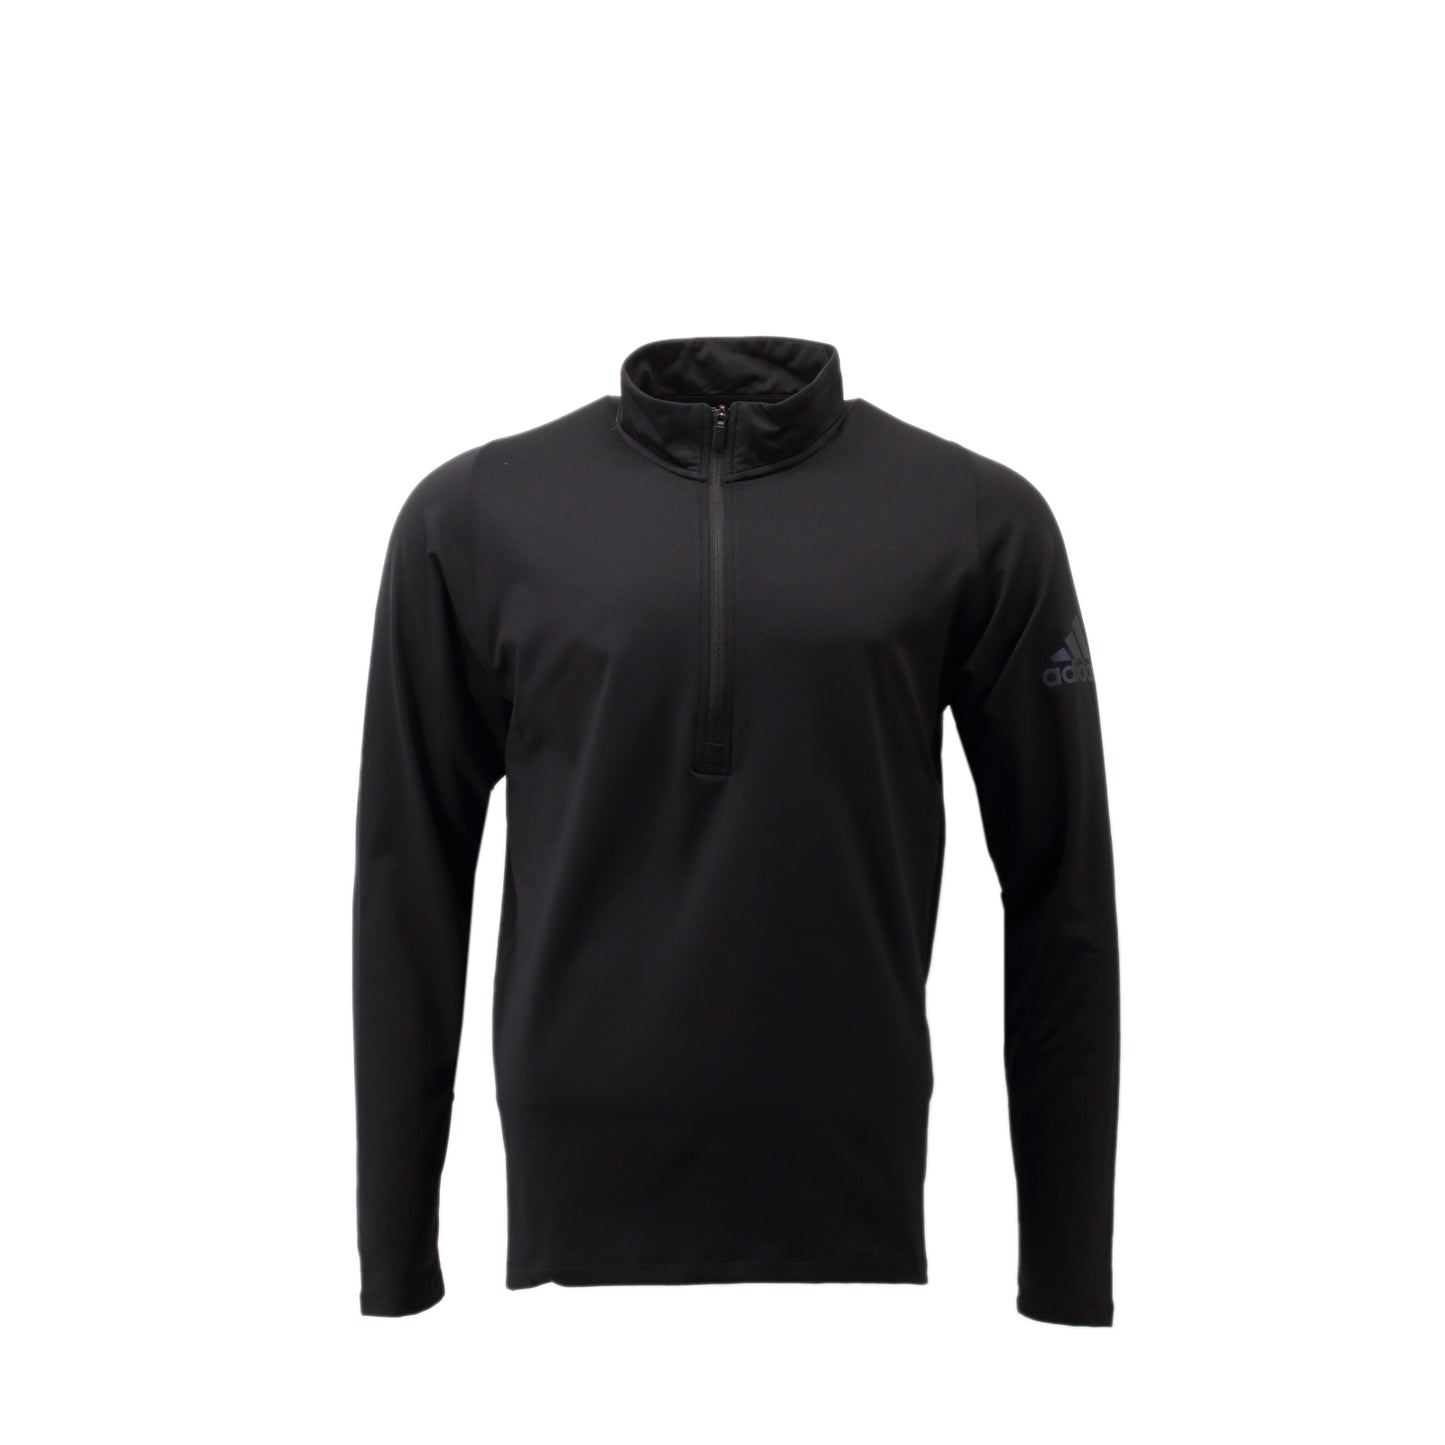 Adidas CAMO Freelift 1/2 Zip Sweatshirt Pullover Shirt Climawarm schwarz DZ7361 S